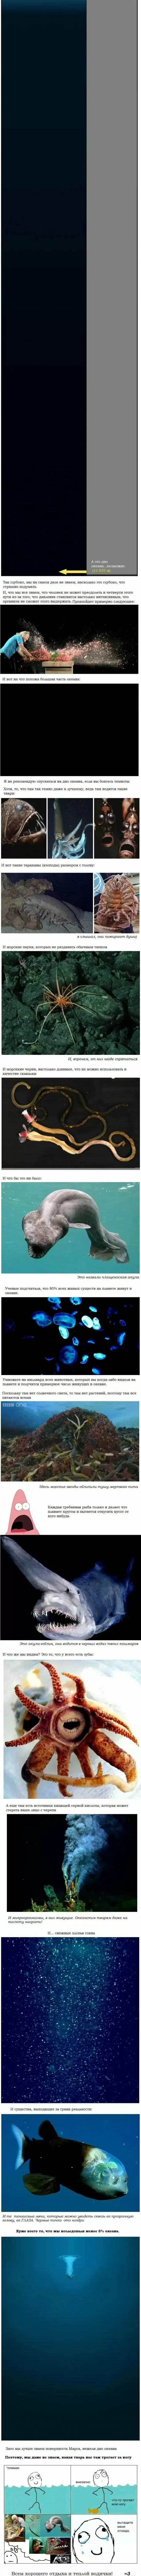 Тайны подводных глубин (1 фото)